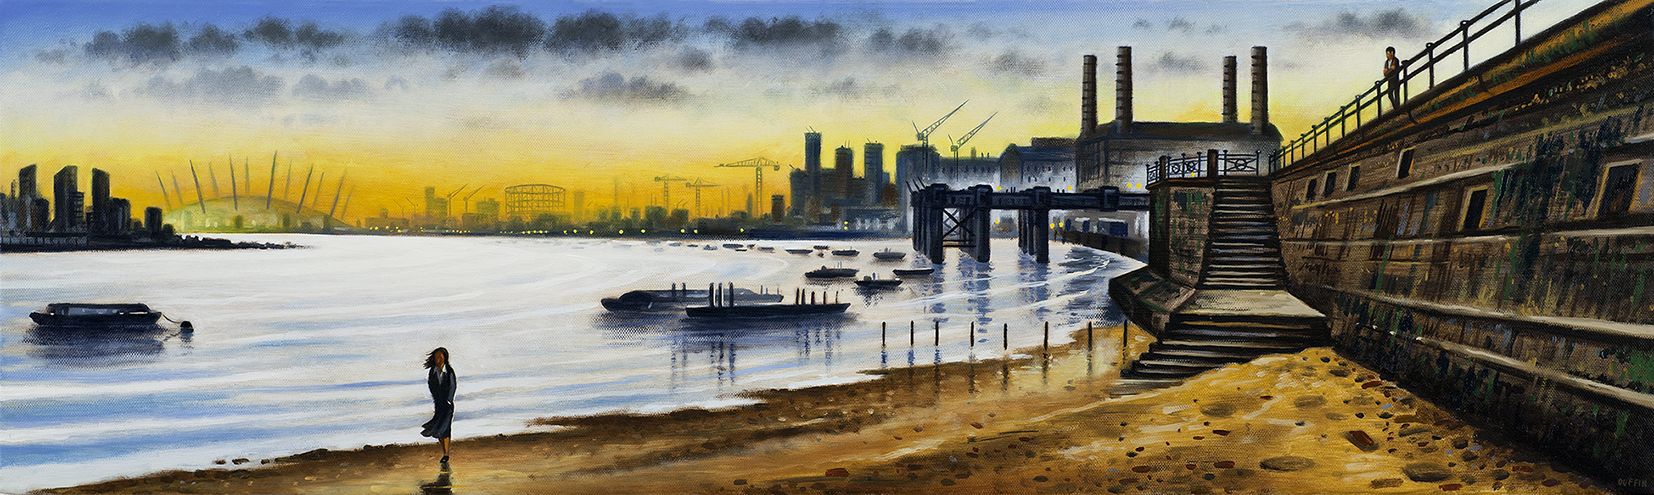 London Panorama - Greenwich Shoreline by John Duffin